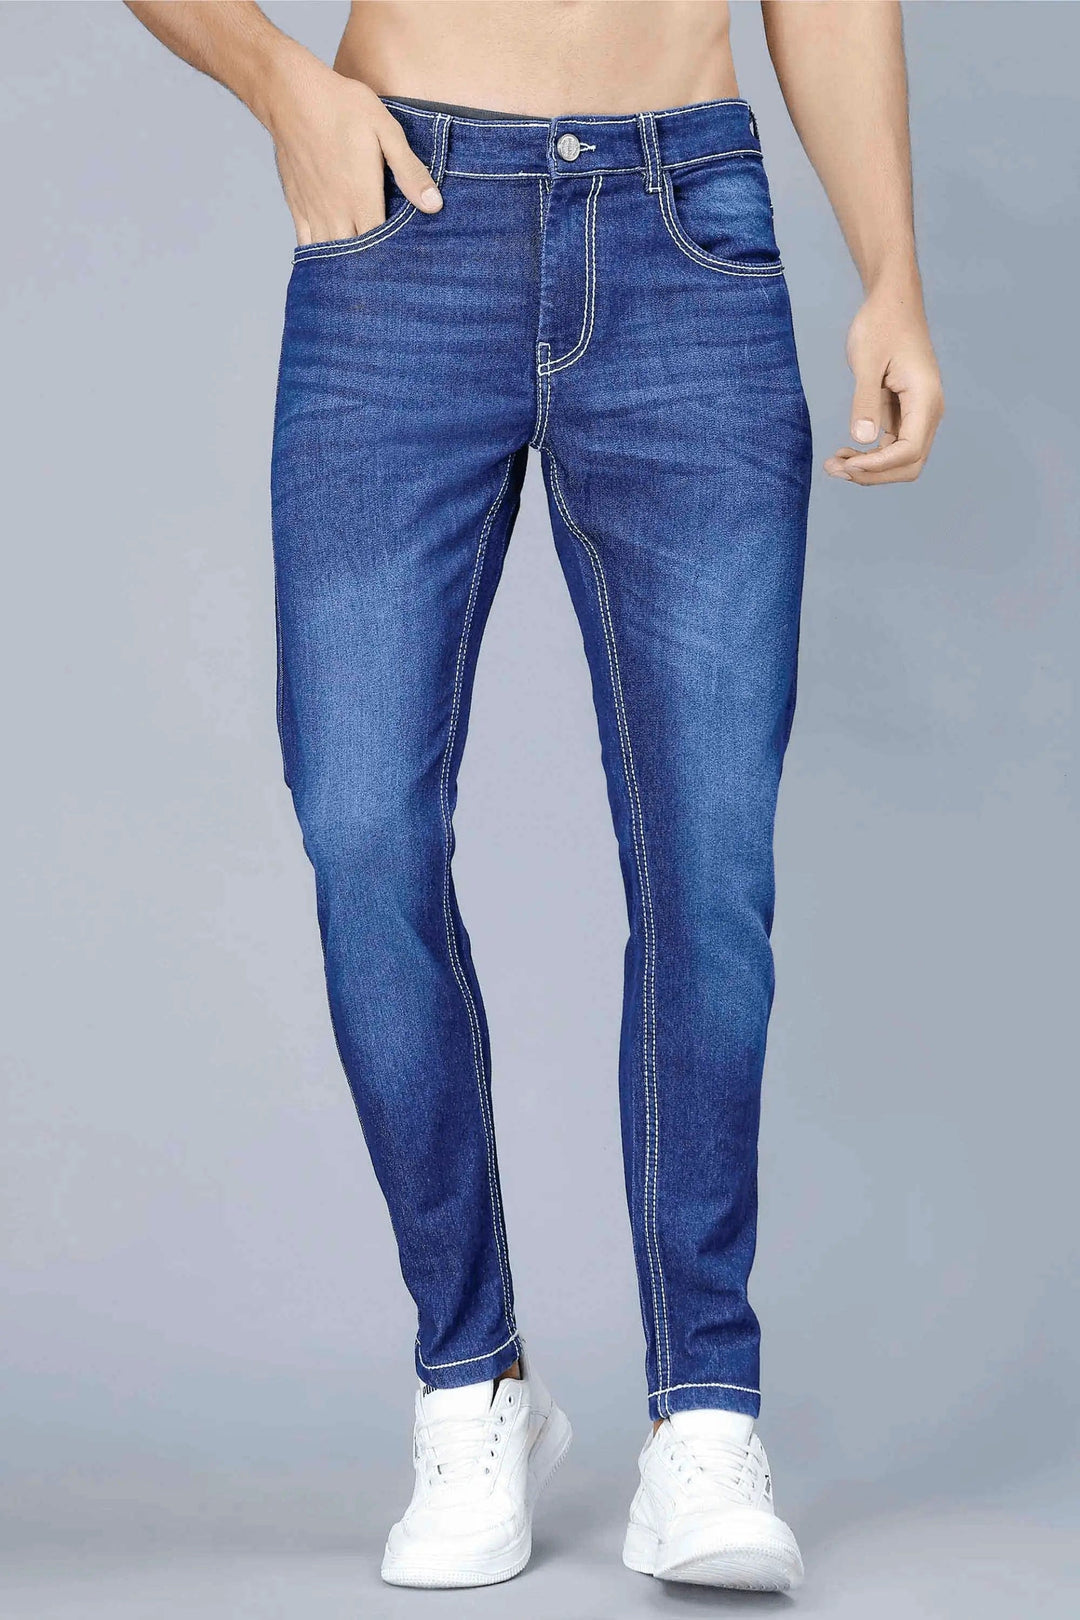 Men's Slim Fit Dark Blue Stretchable Solid Denim Jeans - Peplos Jeans 